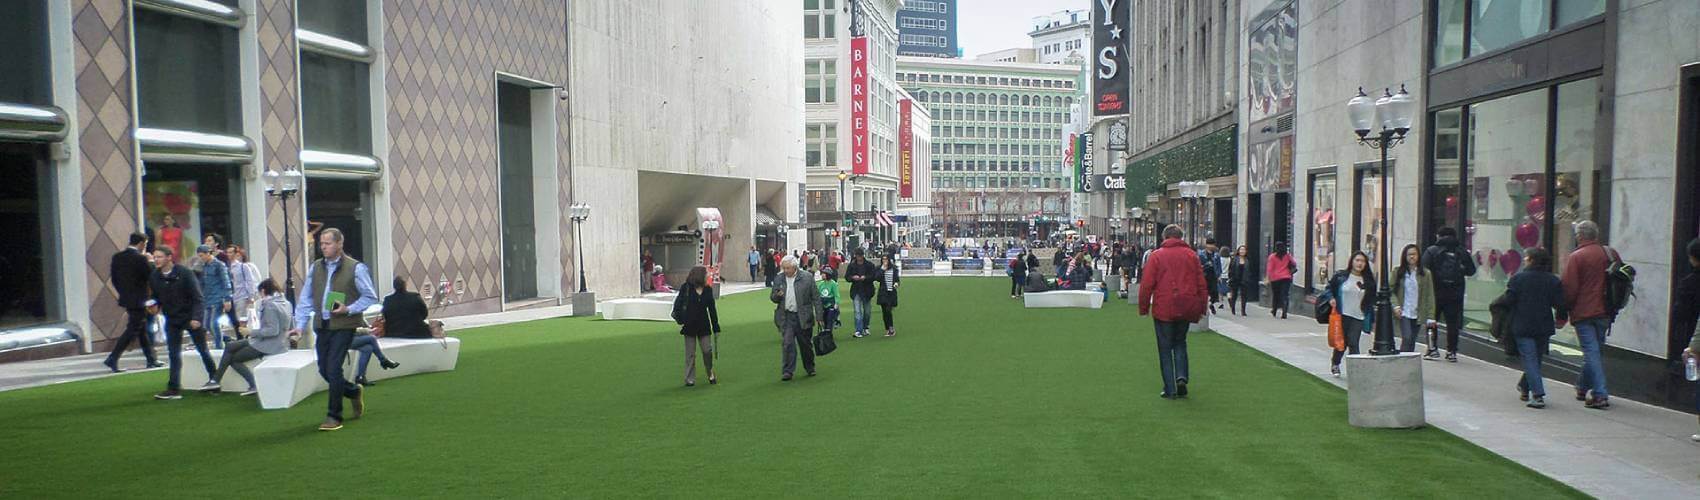 Commercial artificial grass area